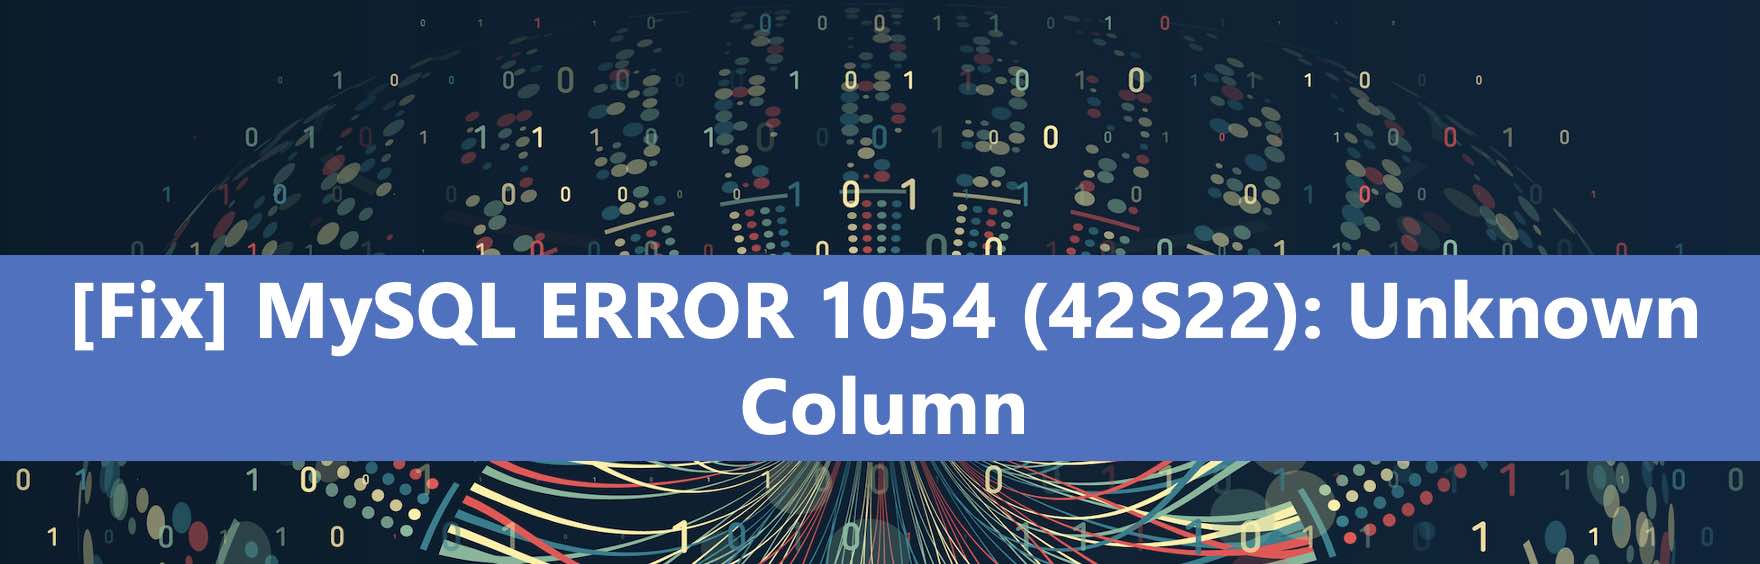 [Fix] MySQL ERROR 1054 (42522)- Unknown Column